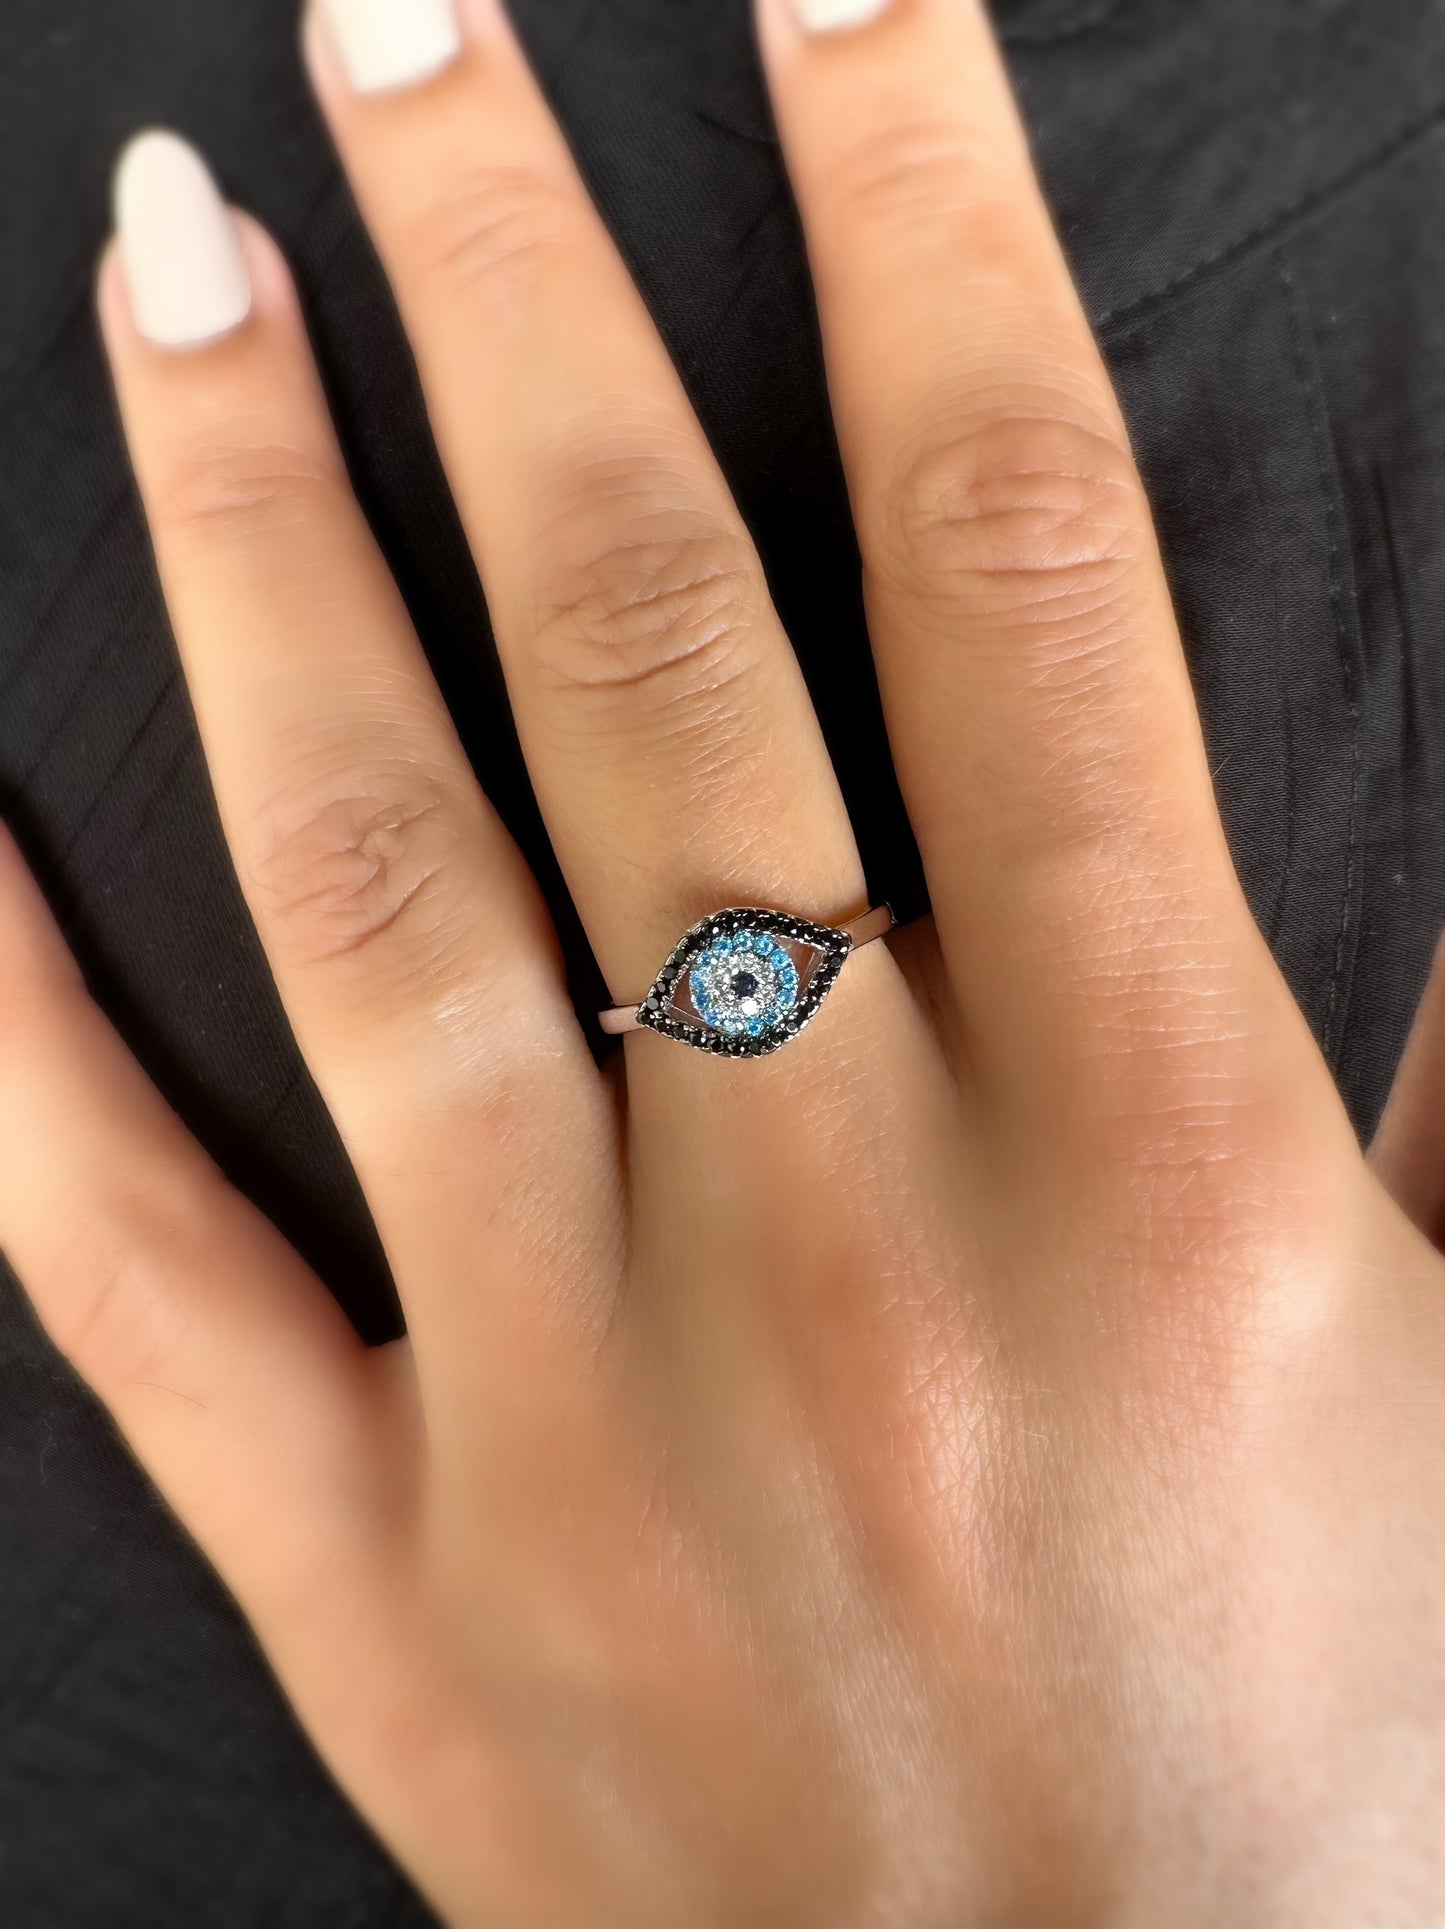 Evil Eye Ring With Black & Blue Zircon Stones